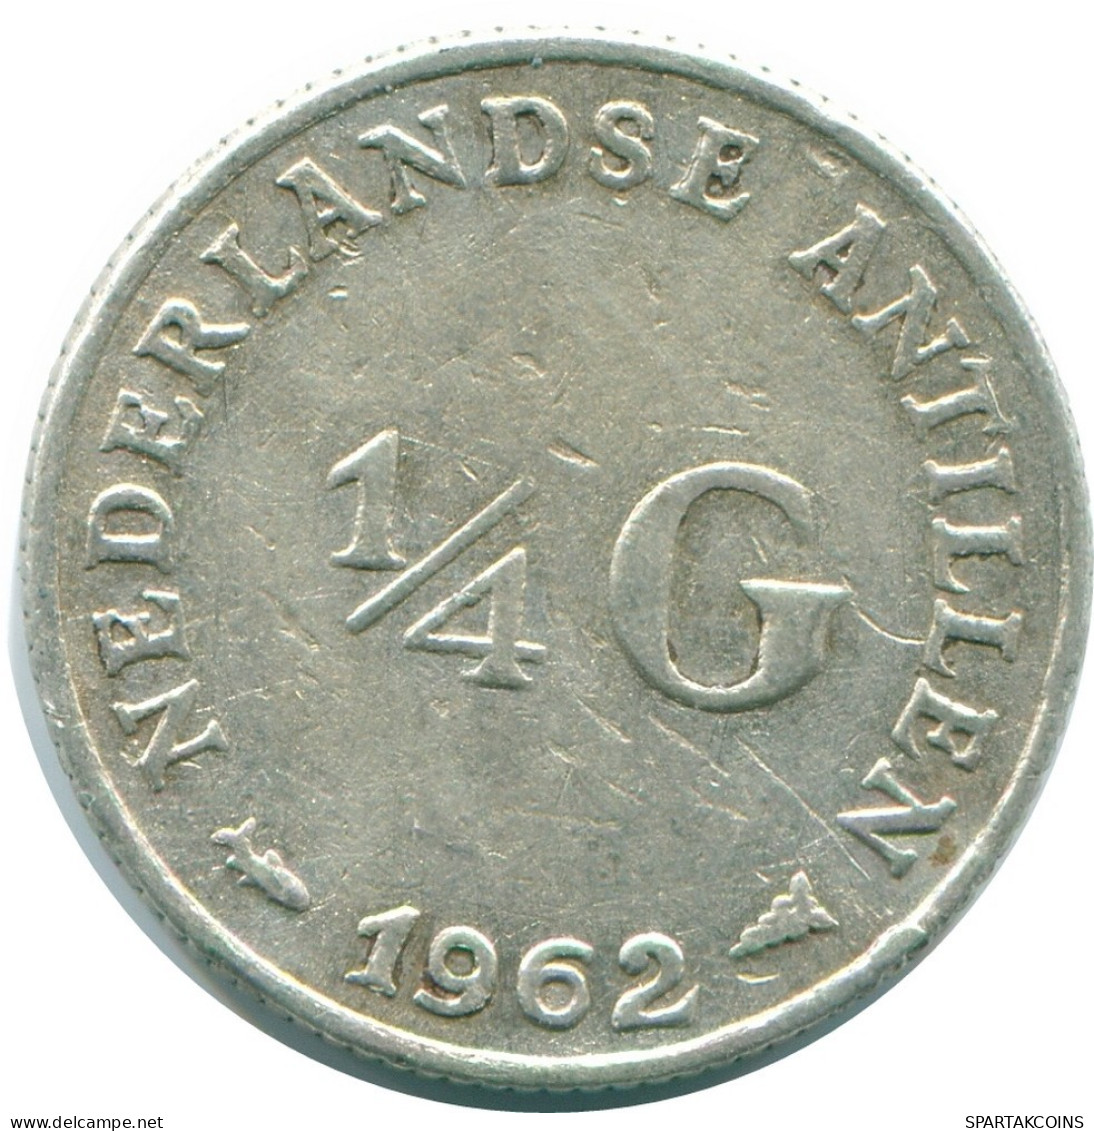 1/4 GULDEN 1962 NETHERLANDS ANTILLES SILVER Colonial Coin #NL11116.4.U.A - Niederländische Antillen